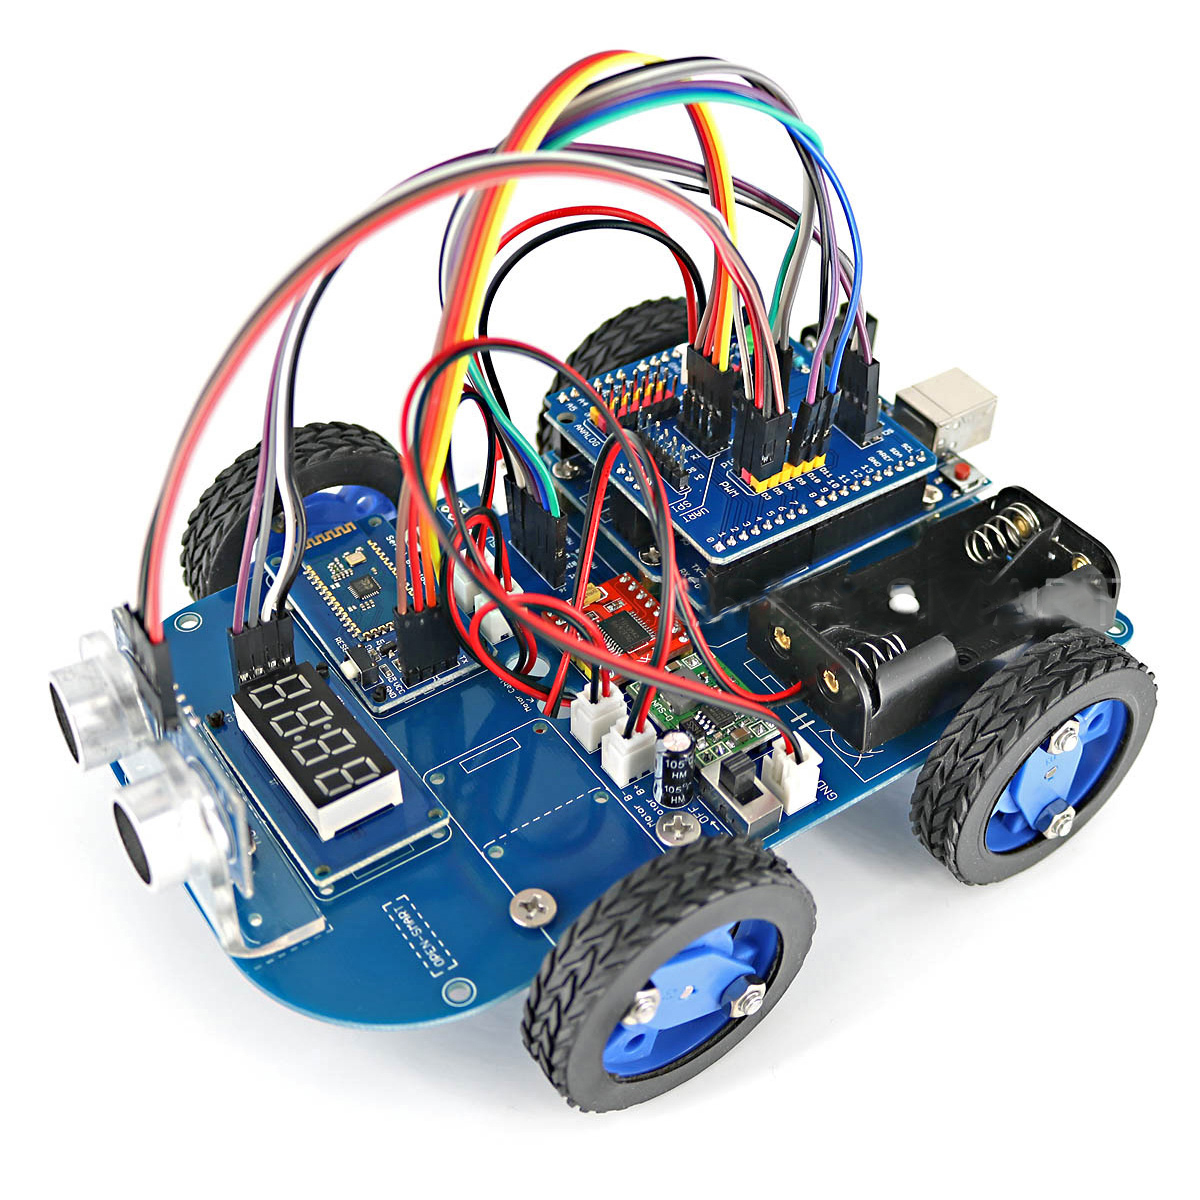 

4WD Bluetooth Control Smart Robot Авто Набор с материнской платой и N20 Gear Мотор для UNO R3 Nano